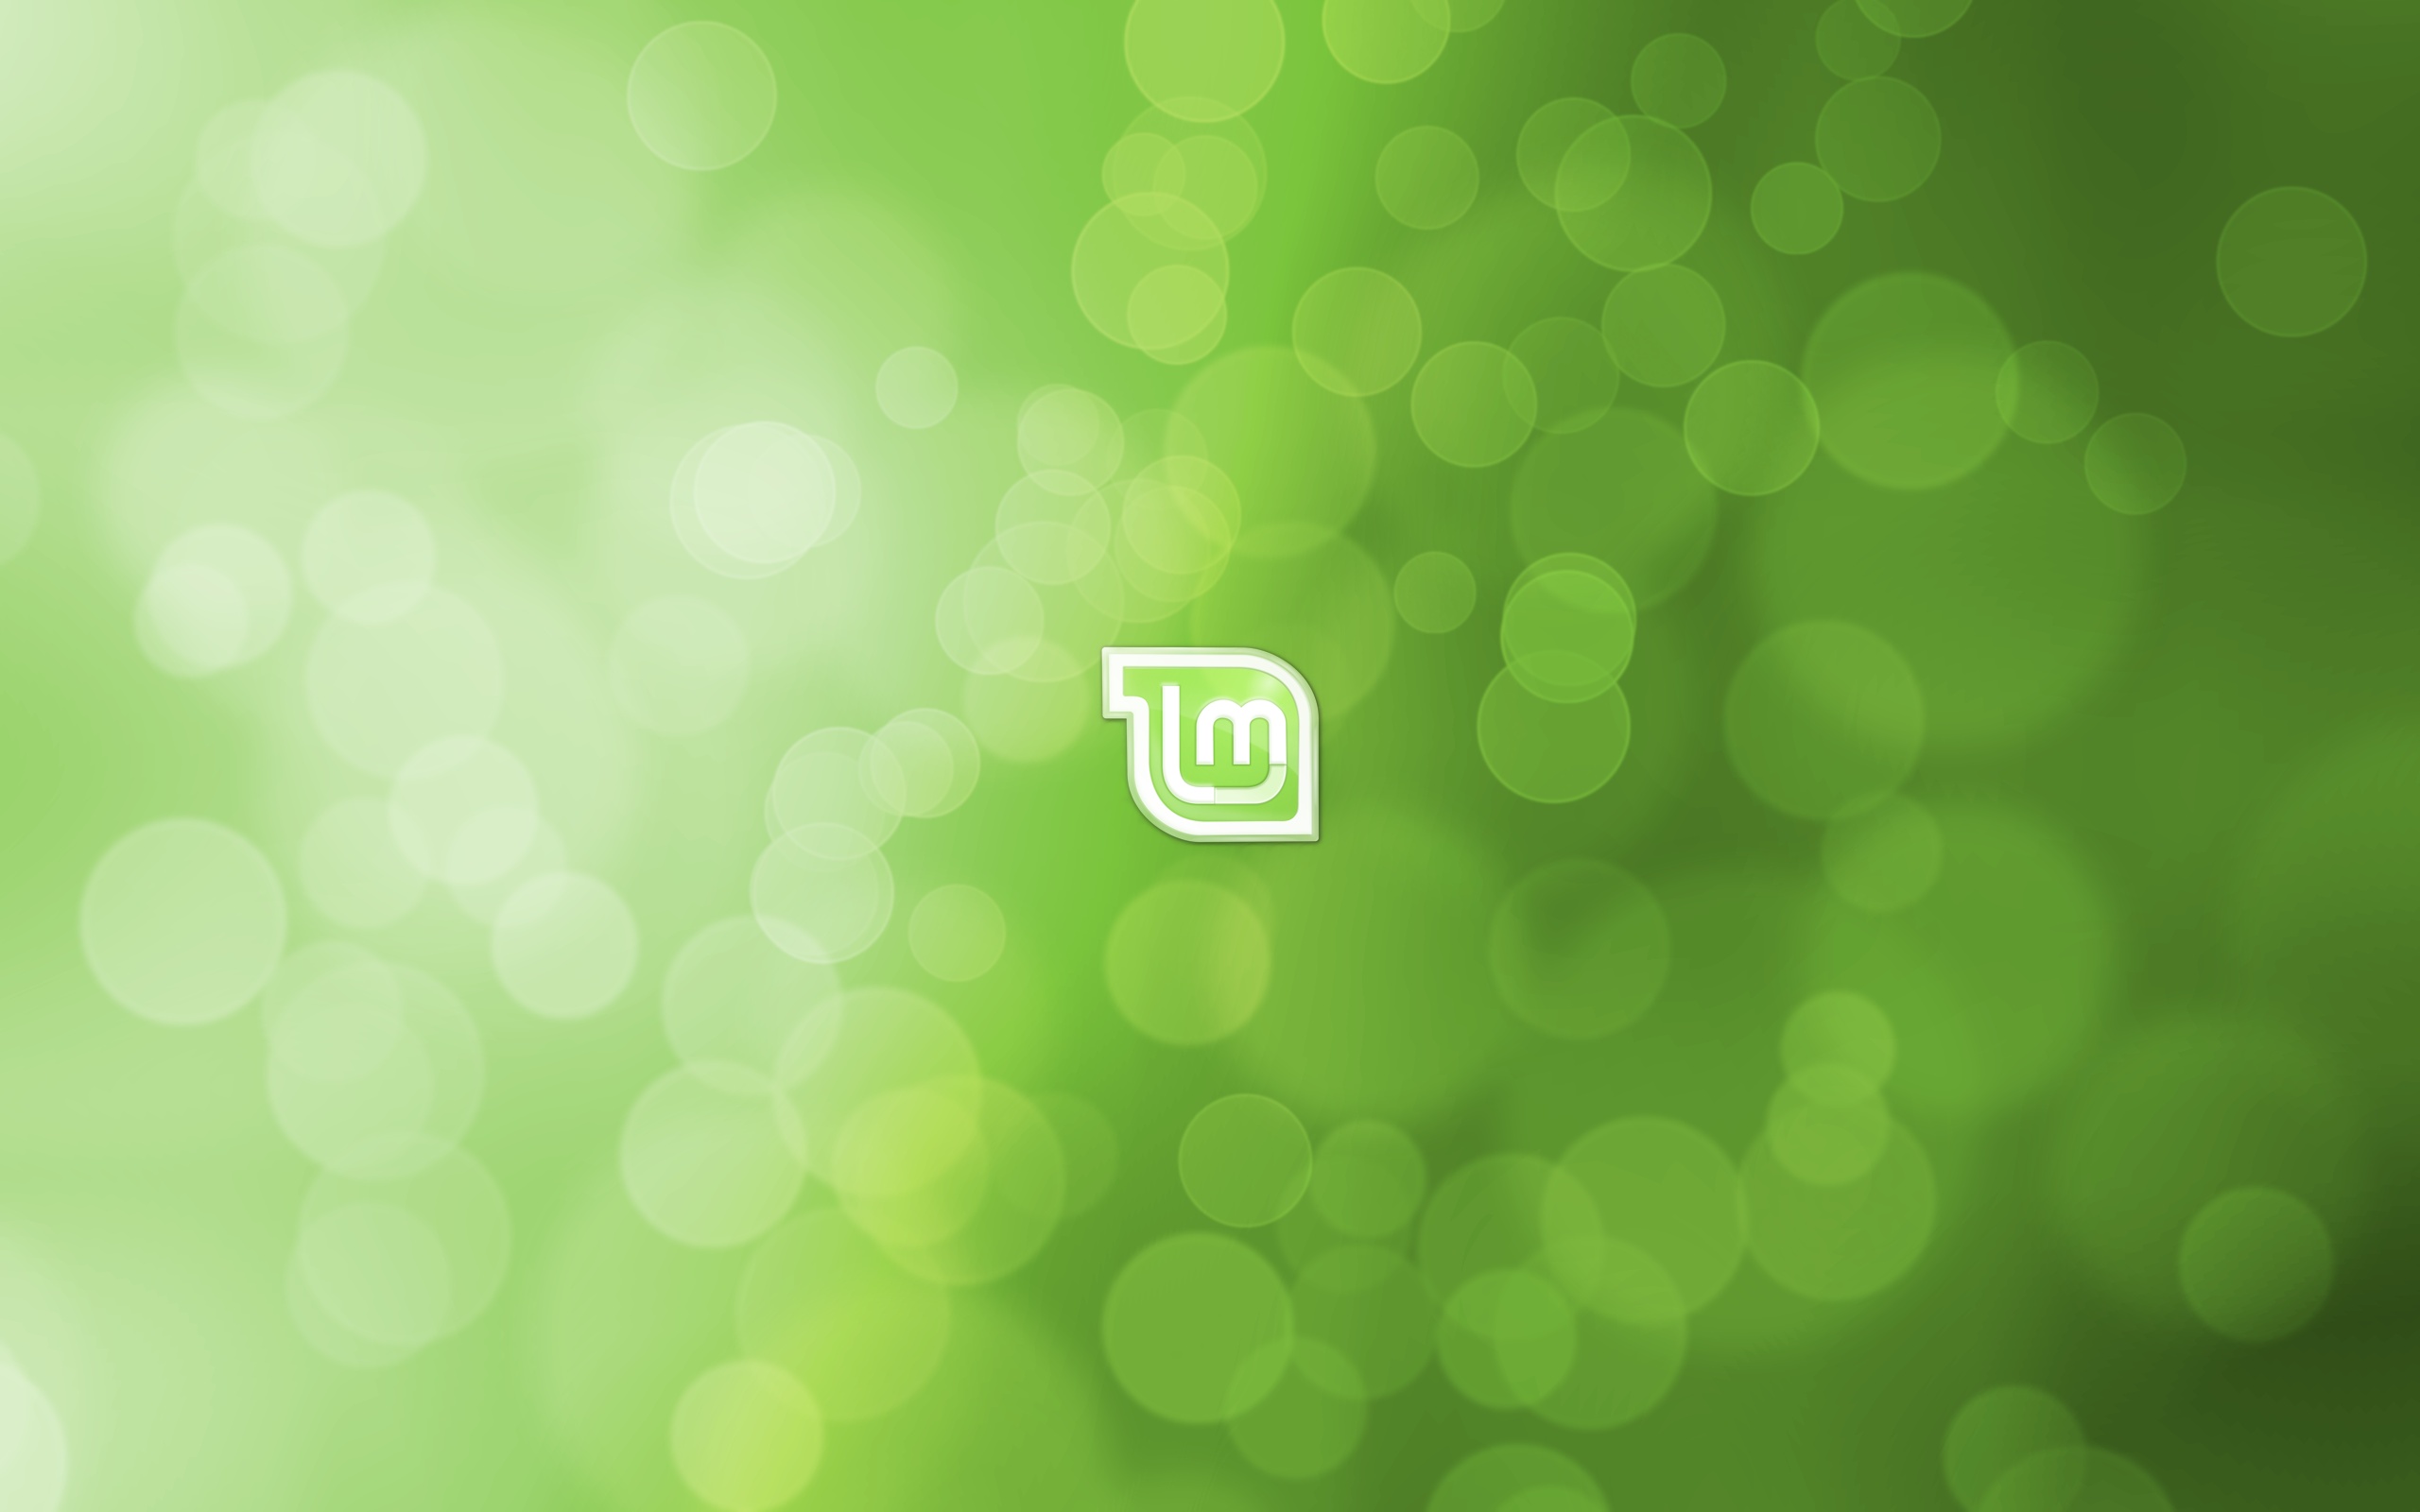 Beautiful Linux Mint Logo Image HD Wallpaper Picture And Desktop